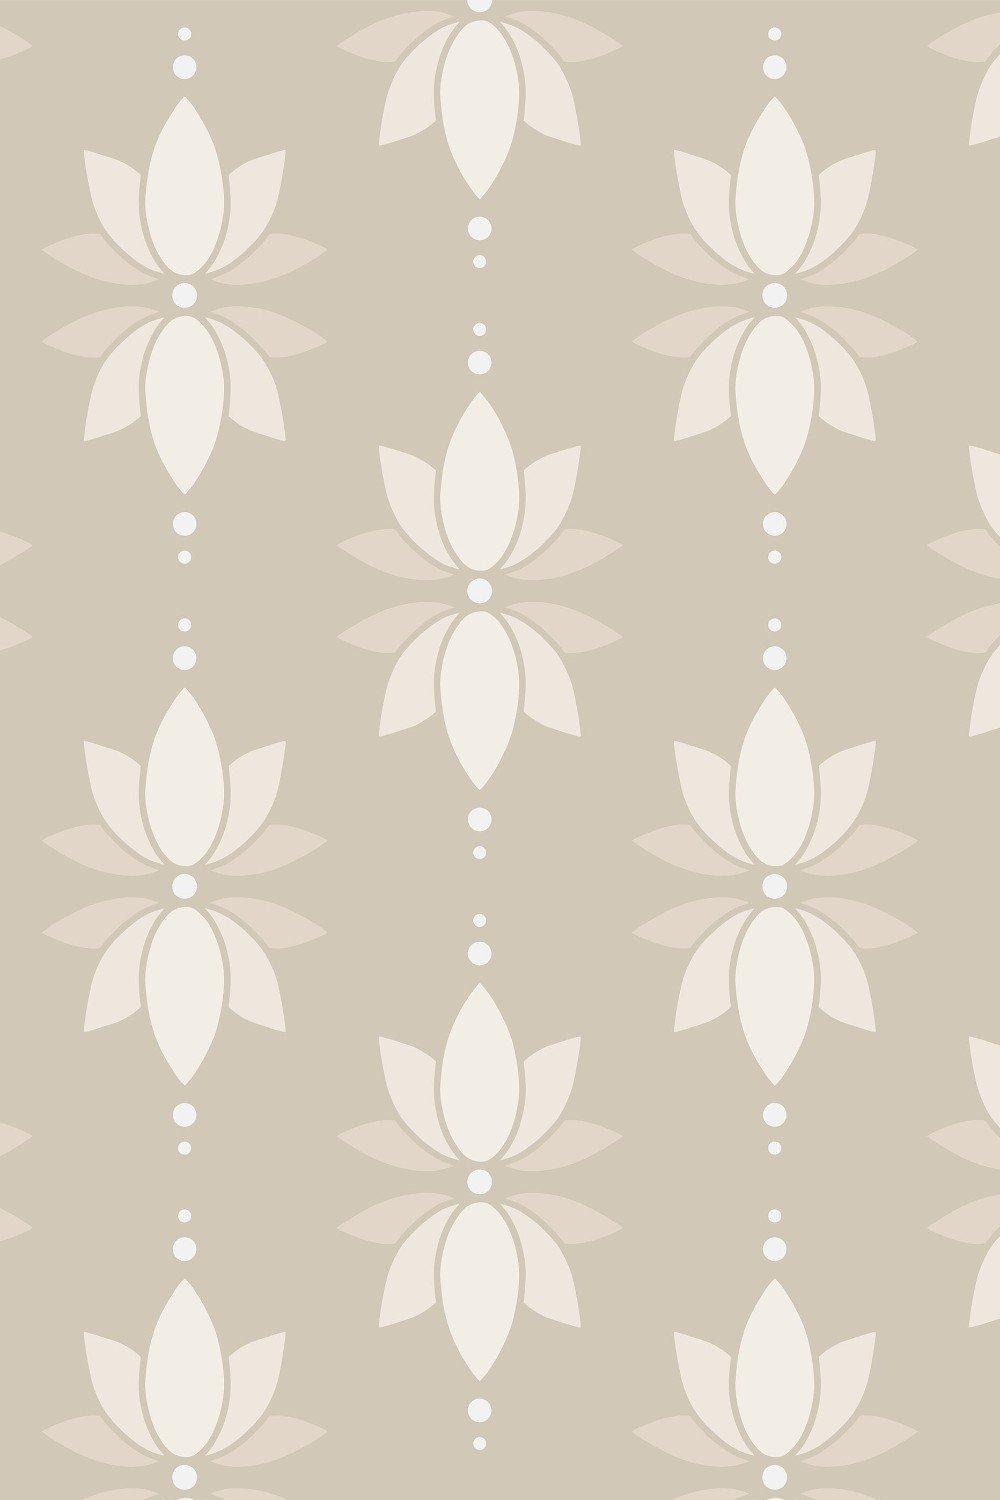 Eco-Friendly Lotus Flower Wallpaper